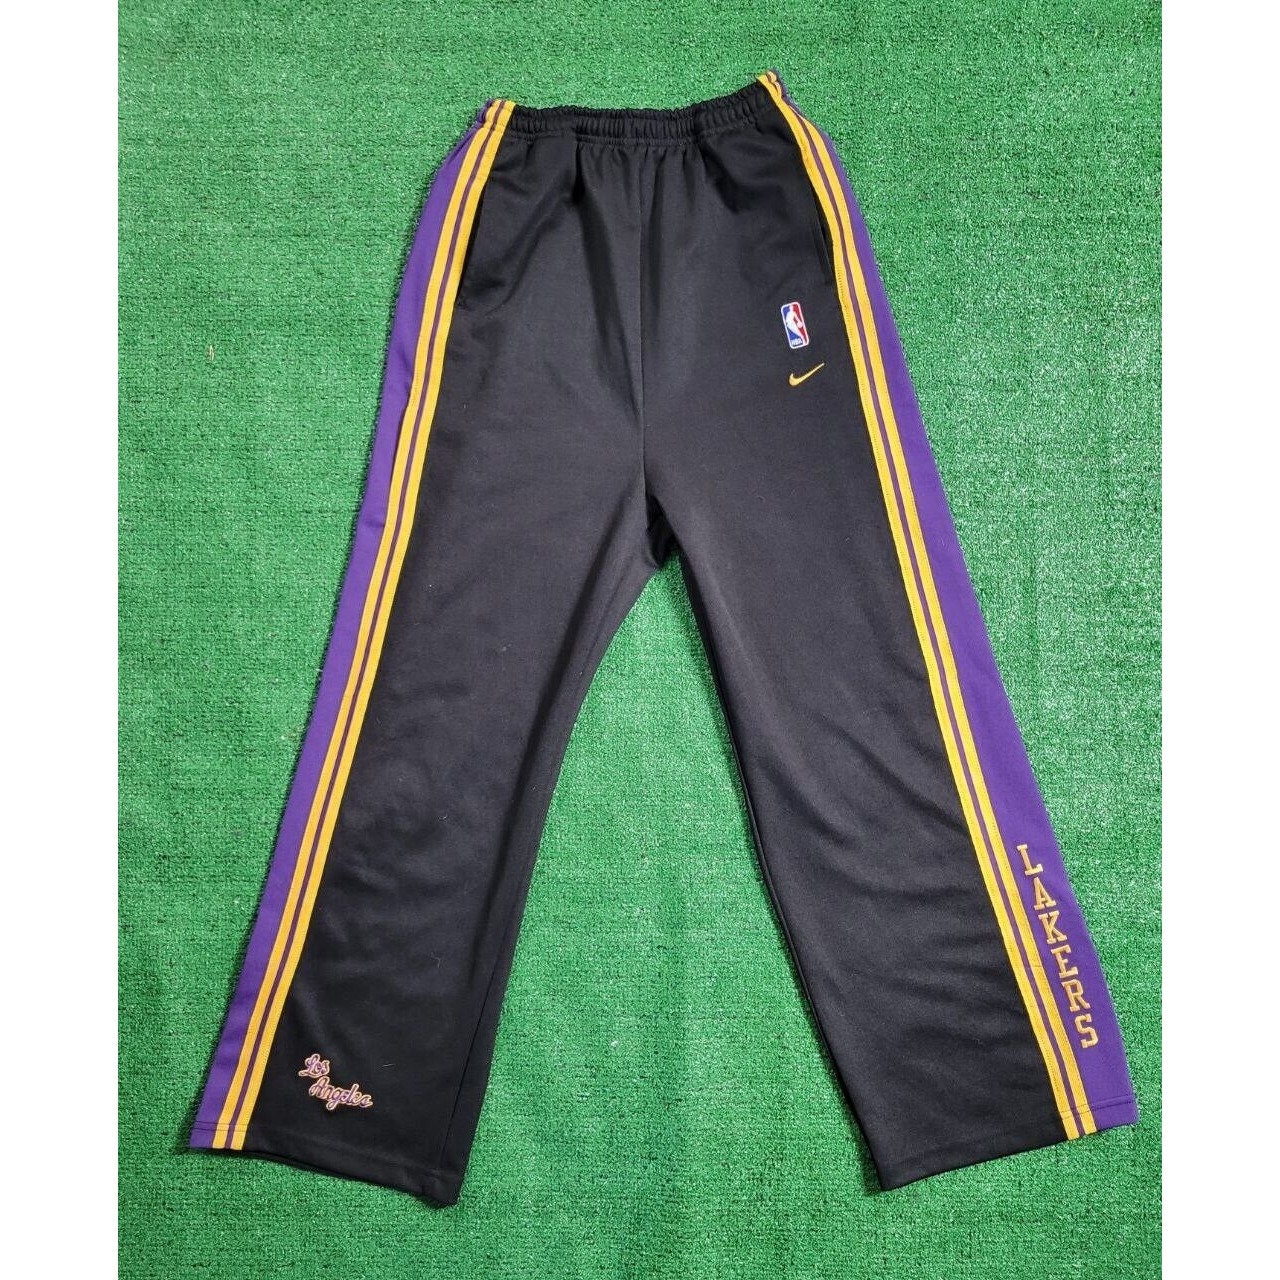 Vintage Nba Pants 